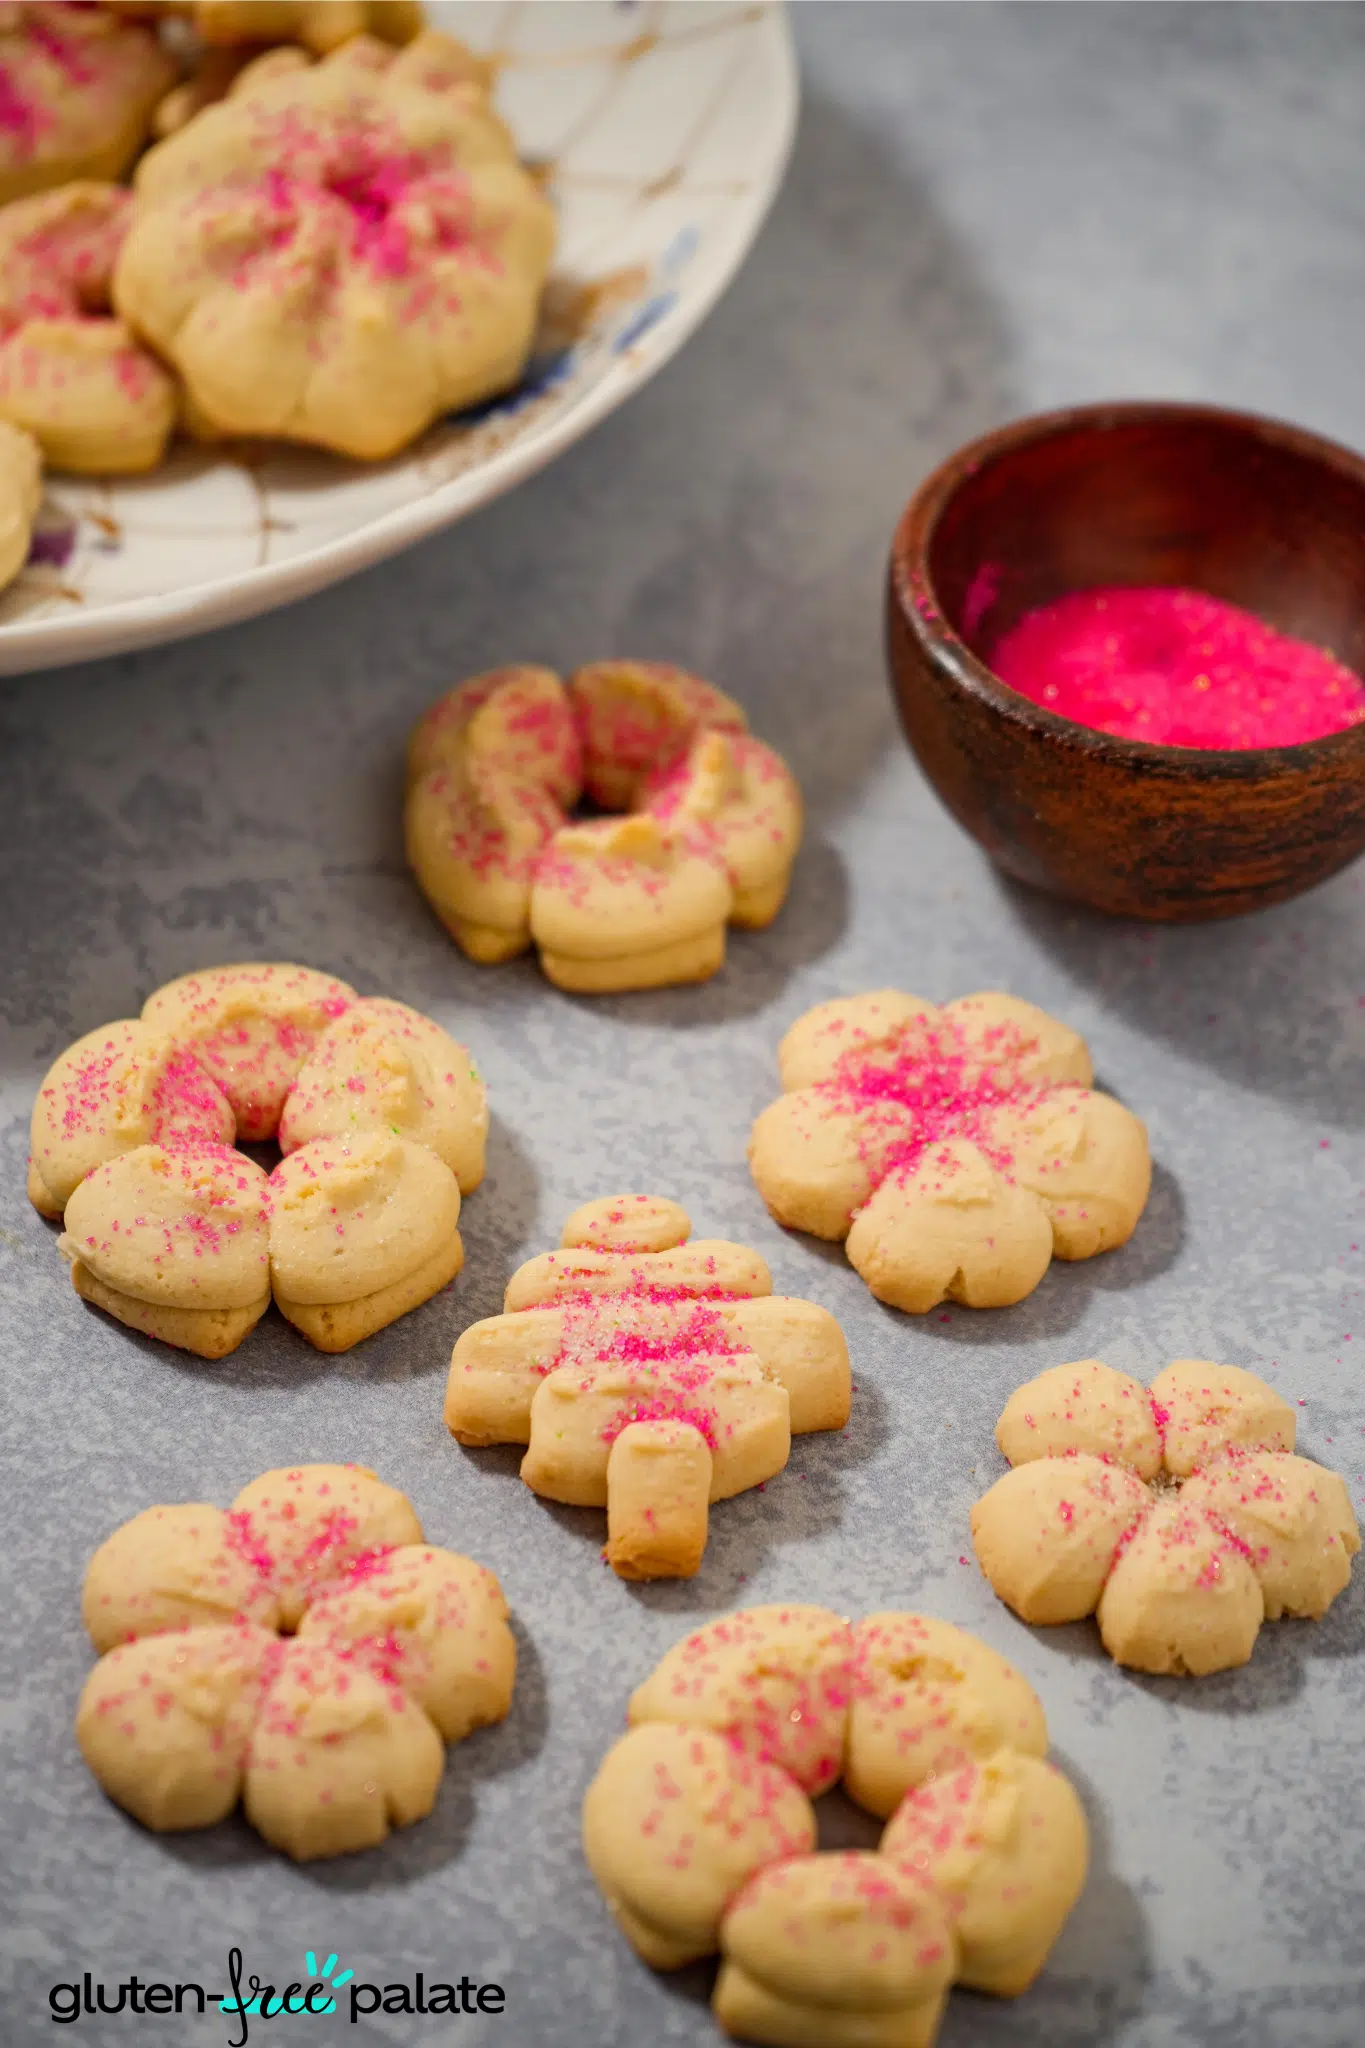 gluten-free spritz cookies being decorated with pink sugar.